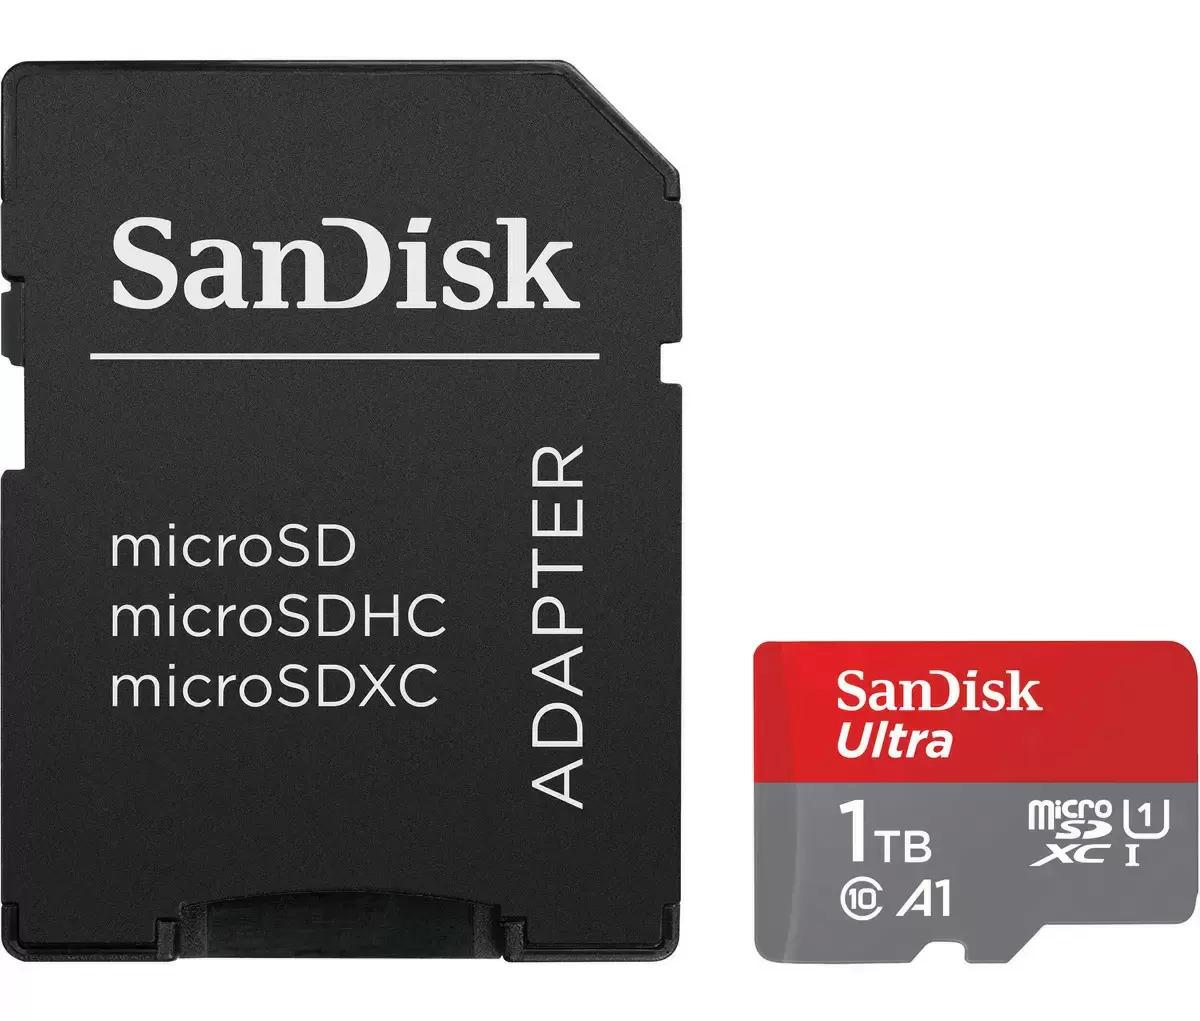 SanDisk 1TB Ultra MicroSDXC UHS-I Memory Card for $69.99 Shipped